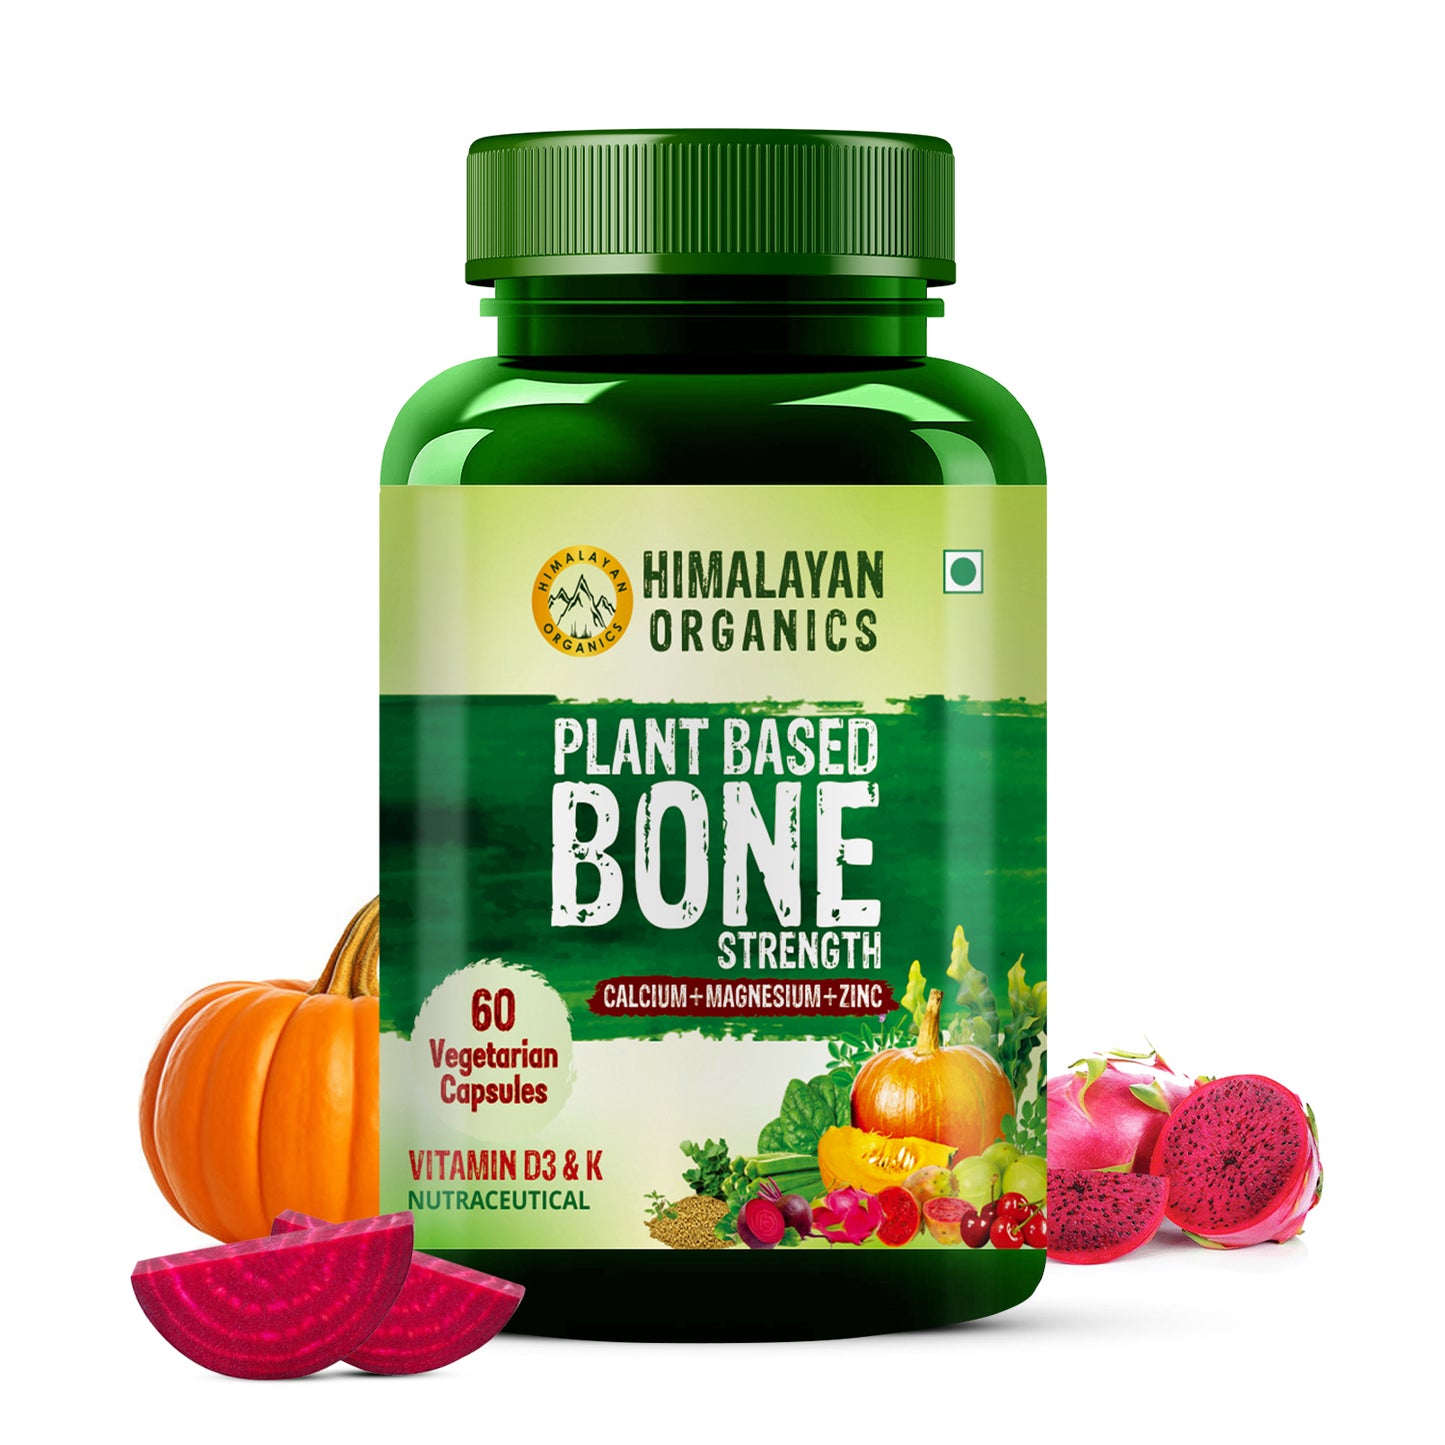 Himalayan Organics Plant Based Bone Strength Supplement | Calcium, Magnesium & Zinc | 60 Veg Capsules